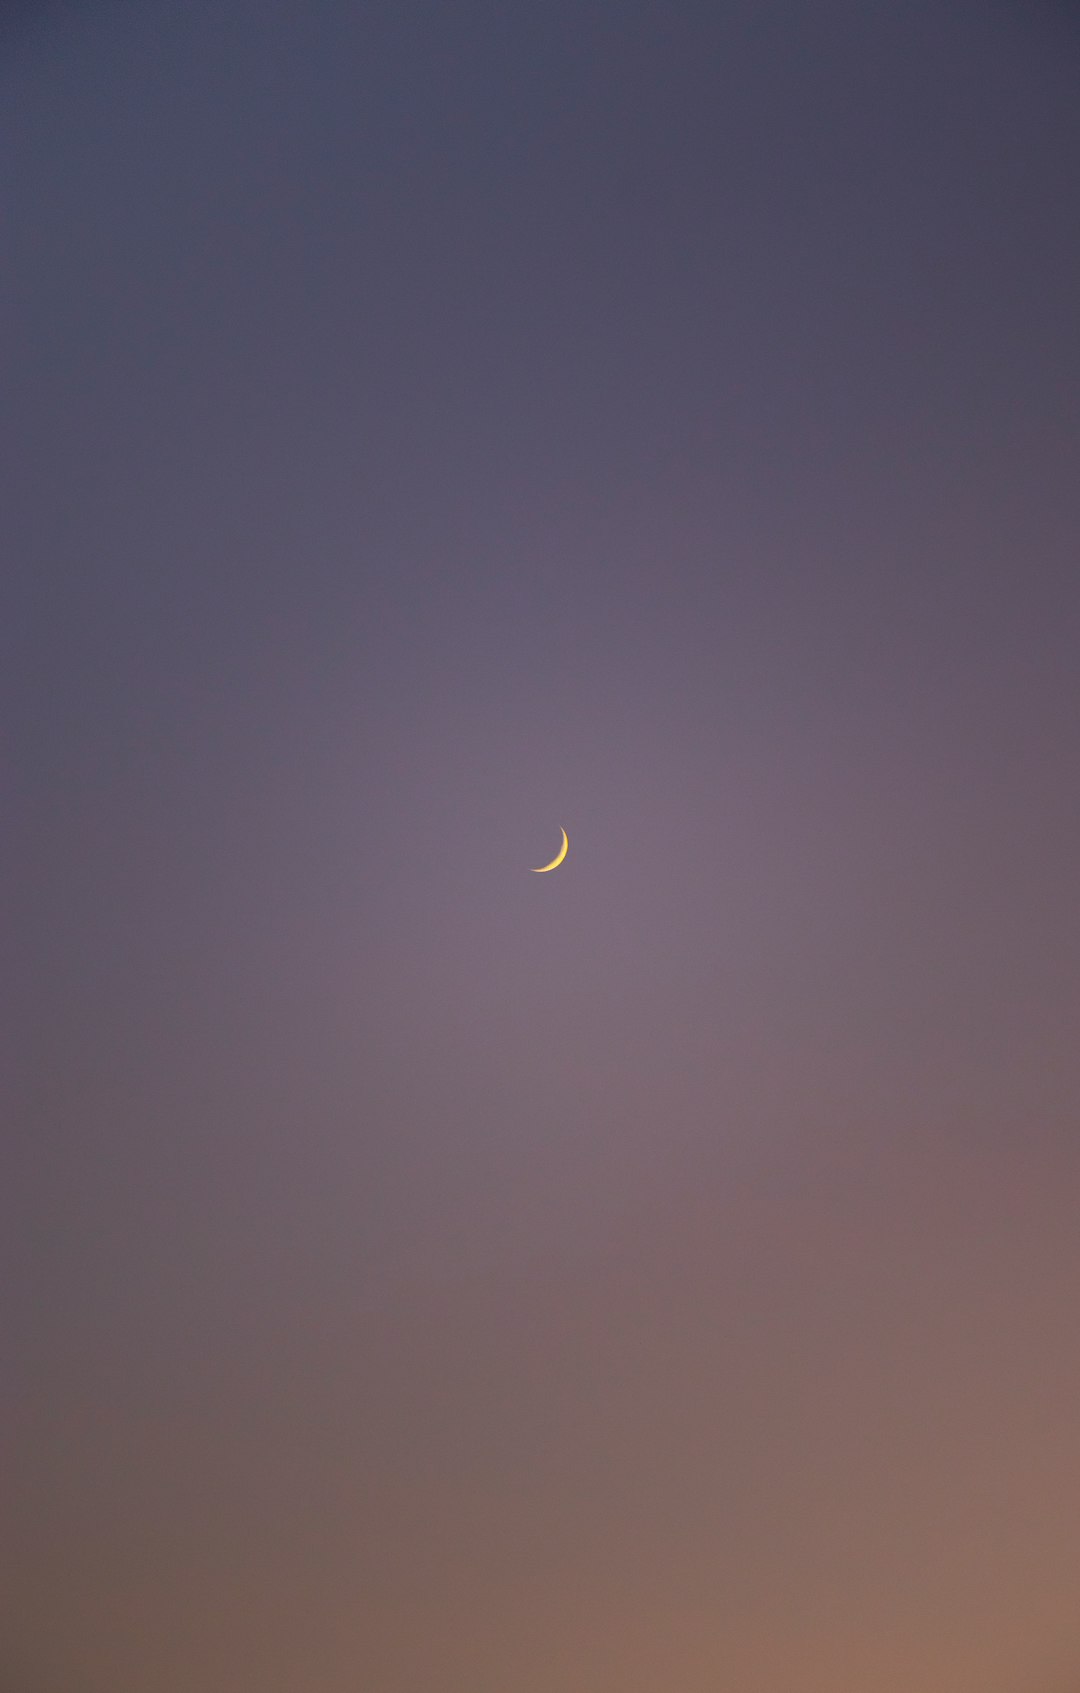 white crescent moon on purple sky